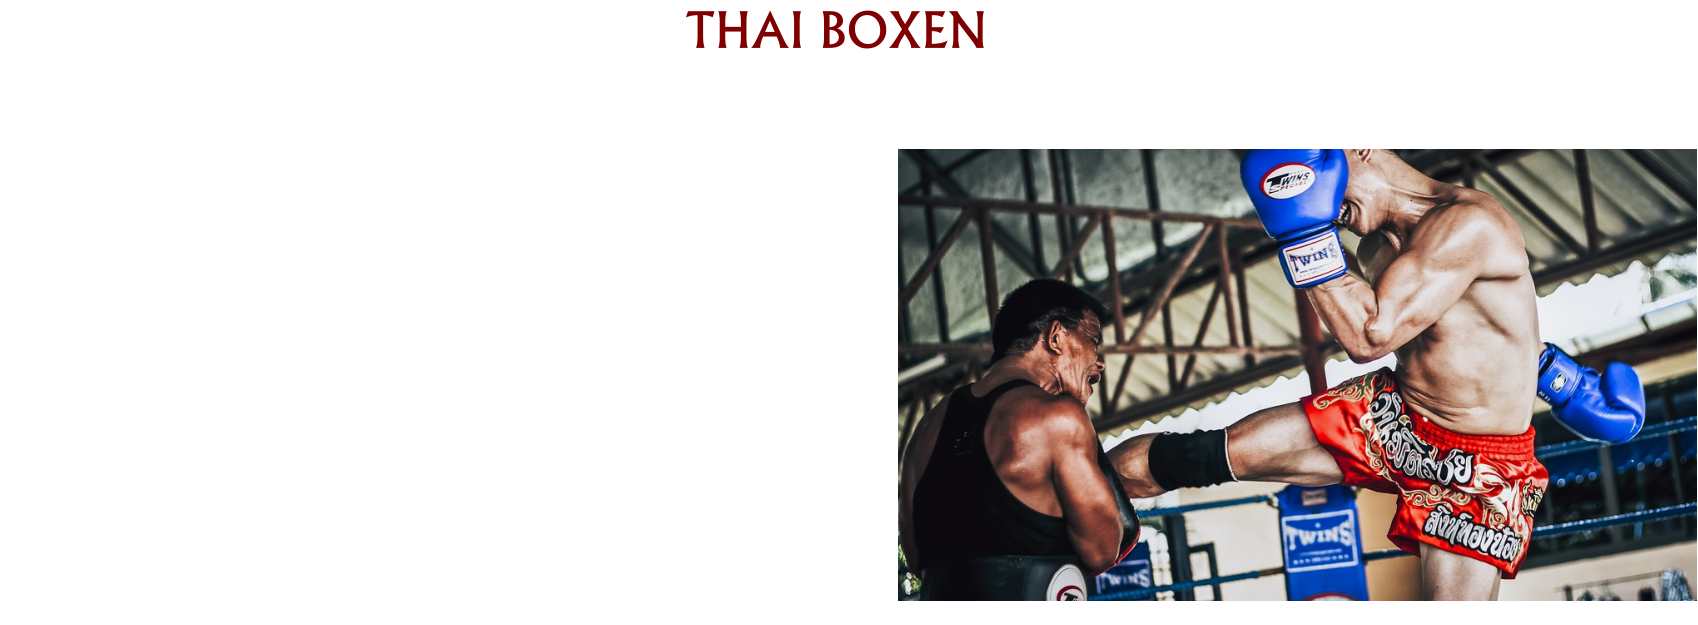 HISTORY THAI BOXEN